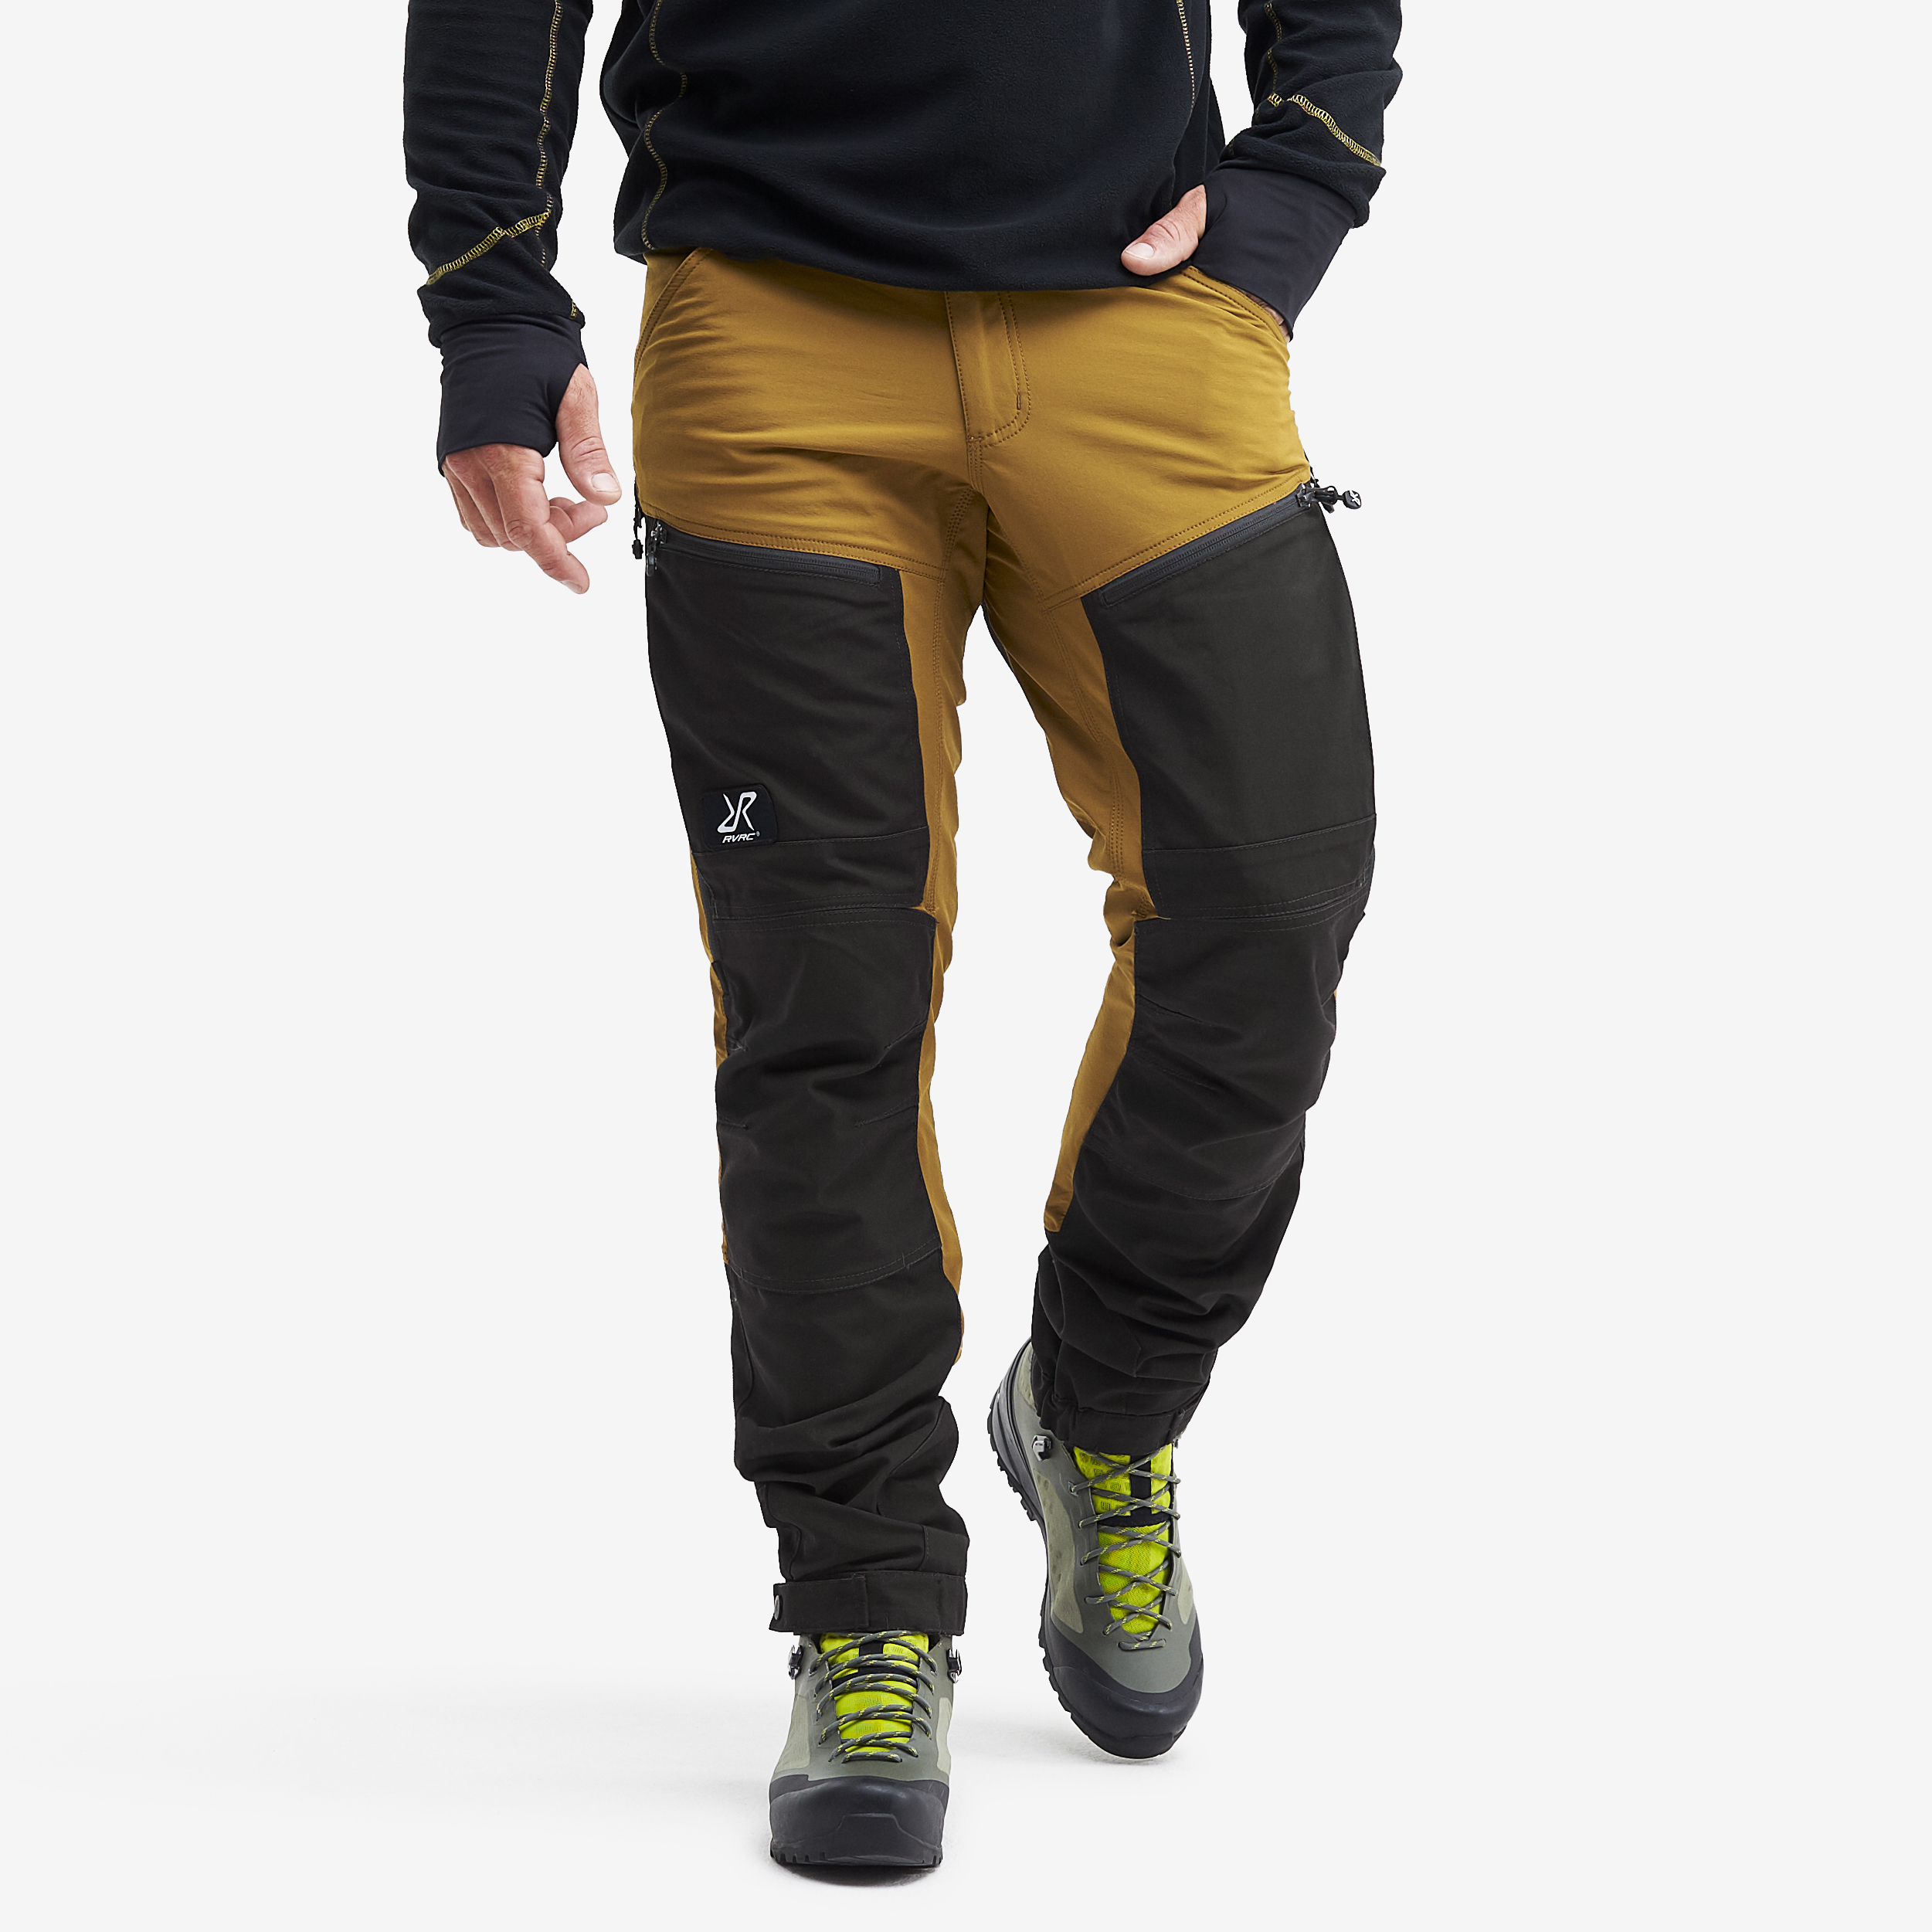 RVRC GP Pro hiking pants for men in yellow